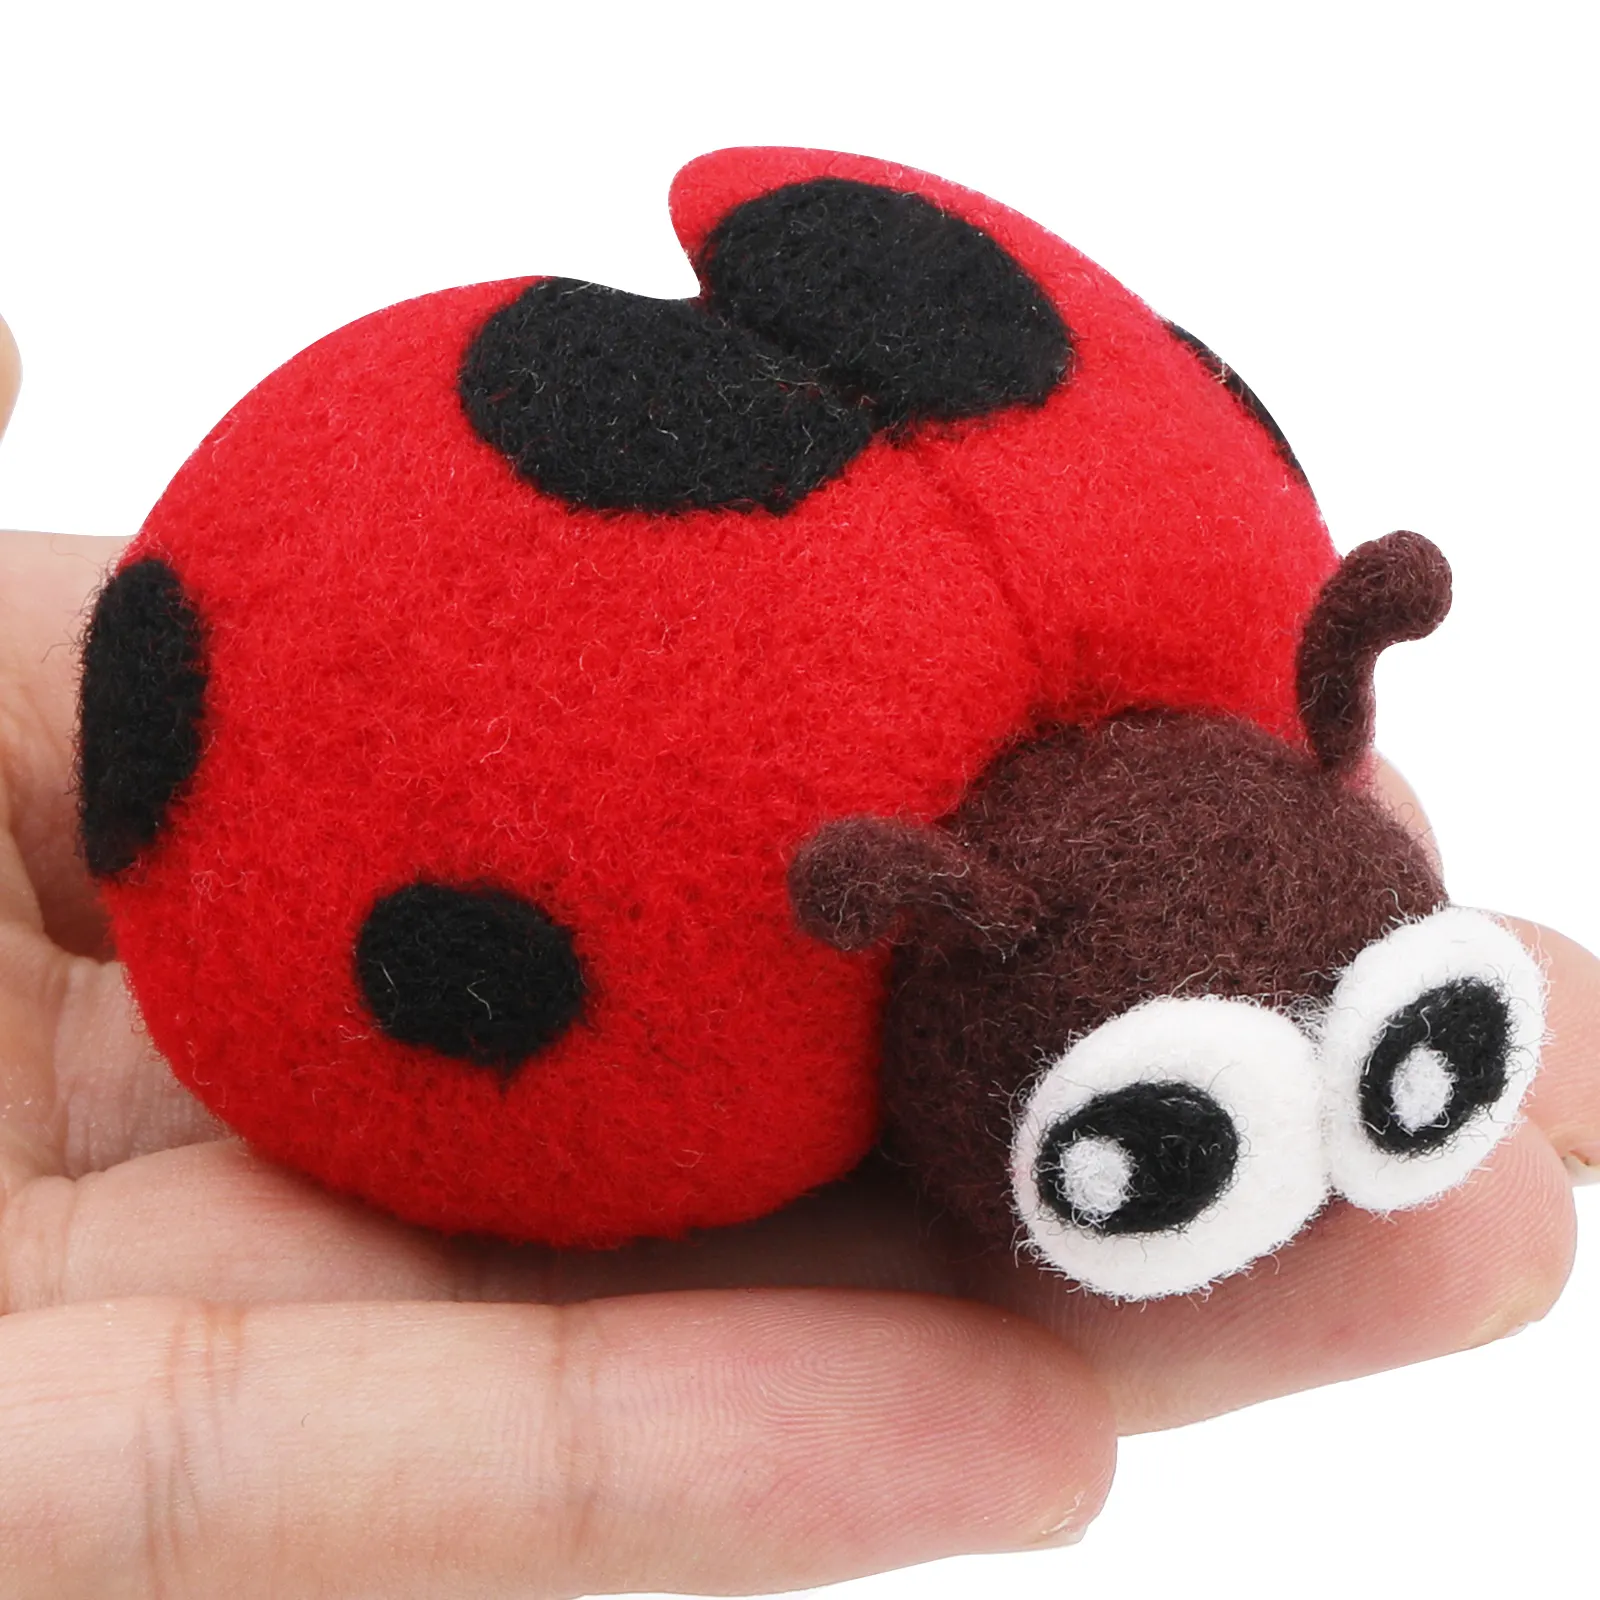 Wool poke felting kit animals ladybug DIY Handmade Craft wool felt craft kit